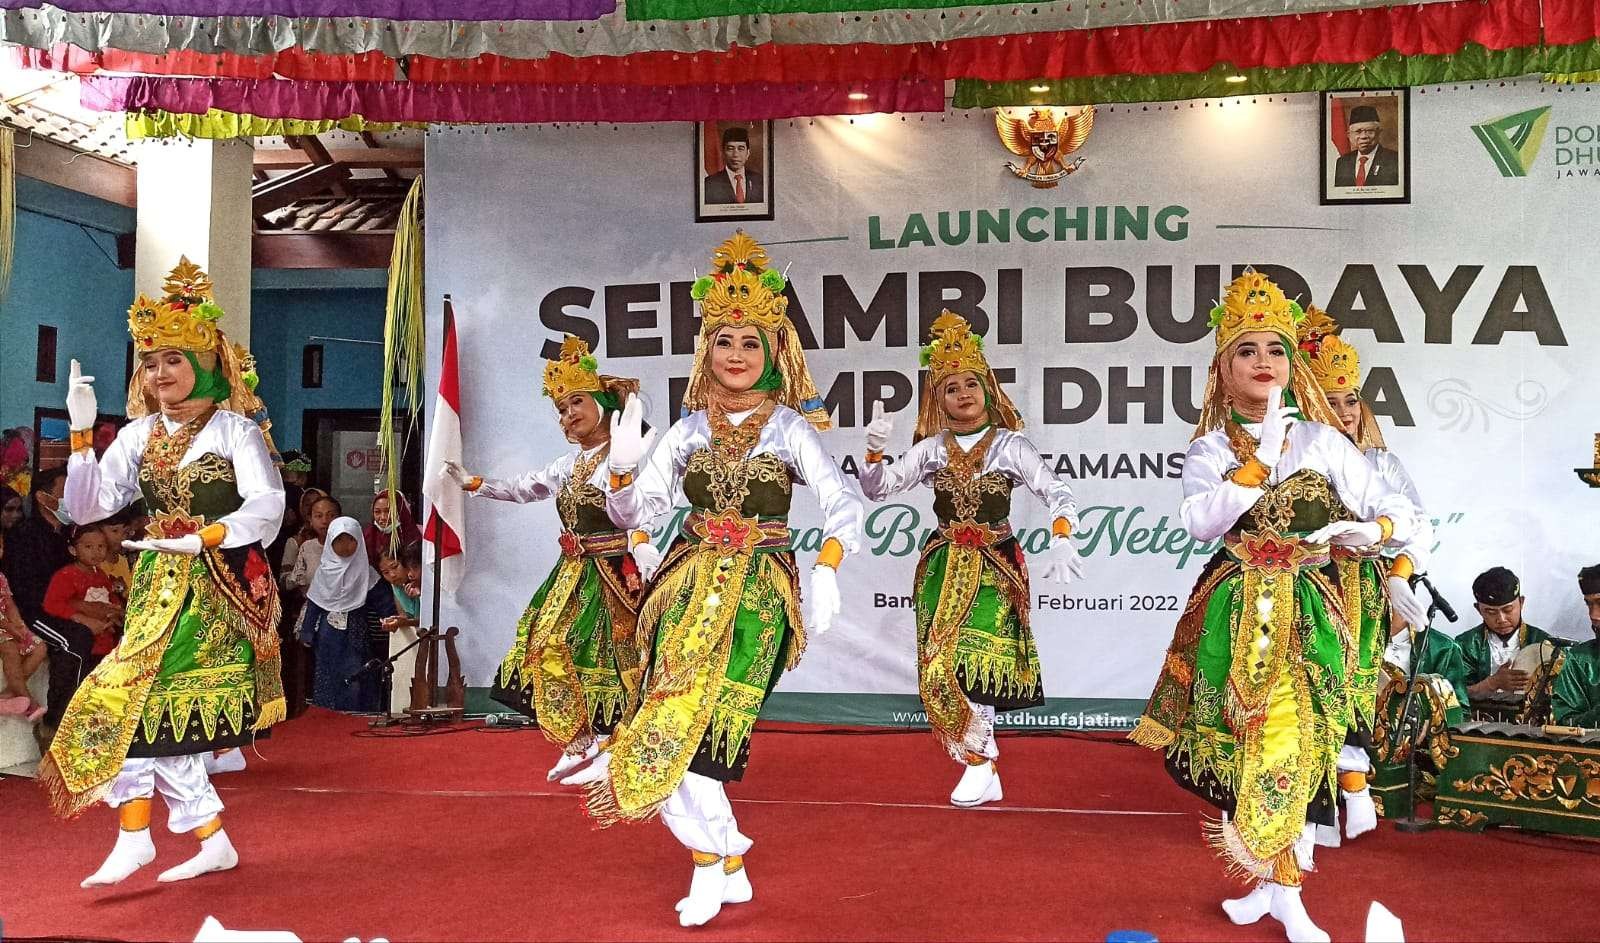 Penampilan Seni Kuntulan dalam peluncuran Serambi Budaya di Desa Tamansuruh, Kecamatan Glagah, Banyuwangi. (Foto: Muh Hujaini/Ngopibareng.id)